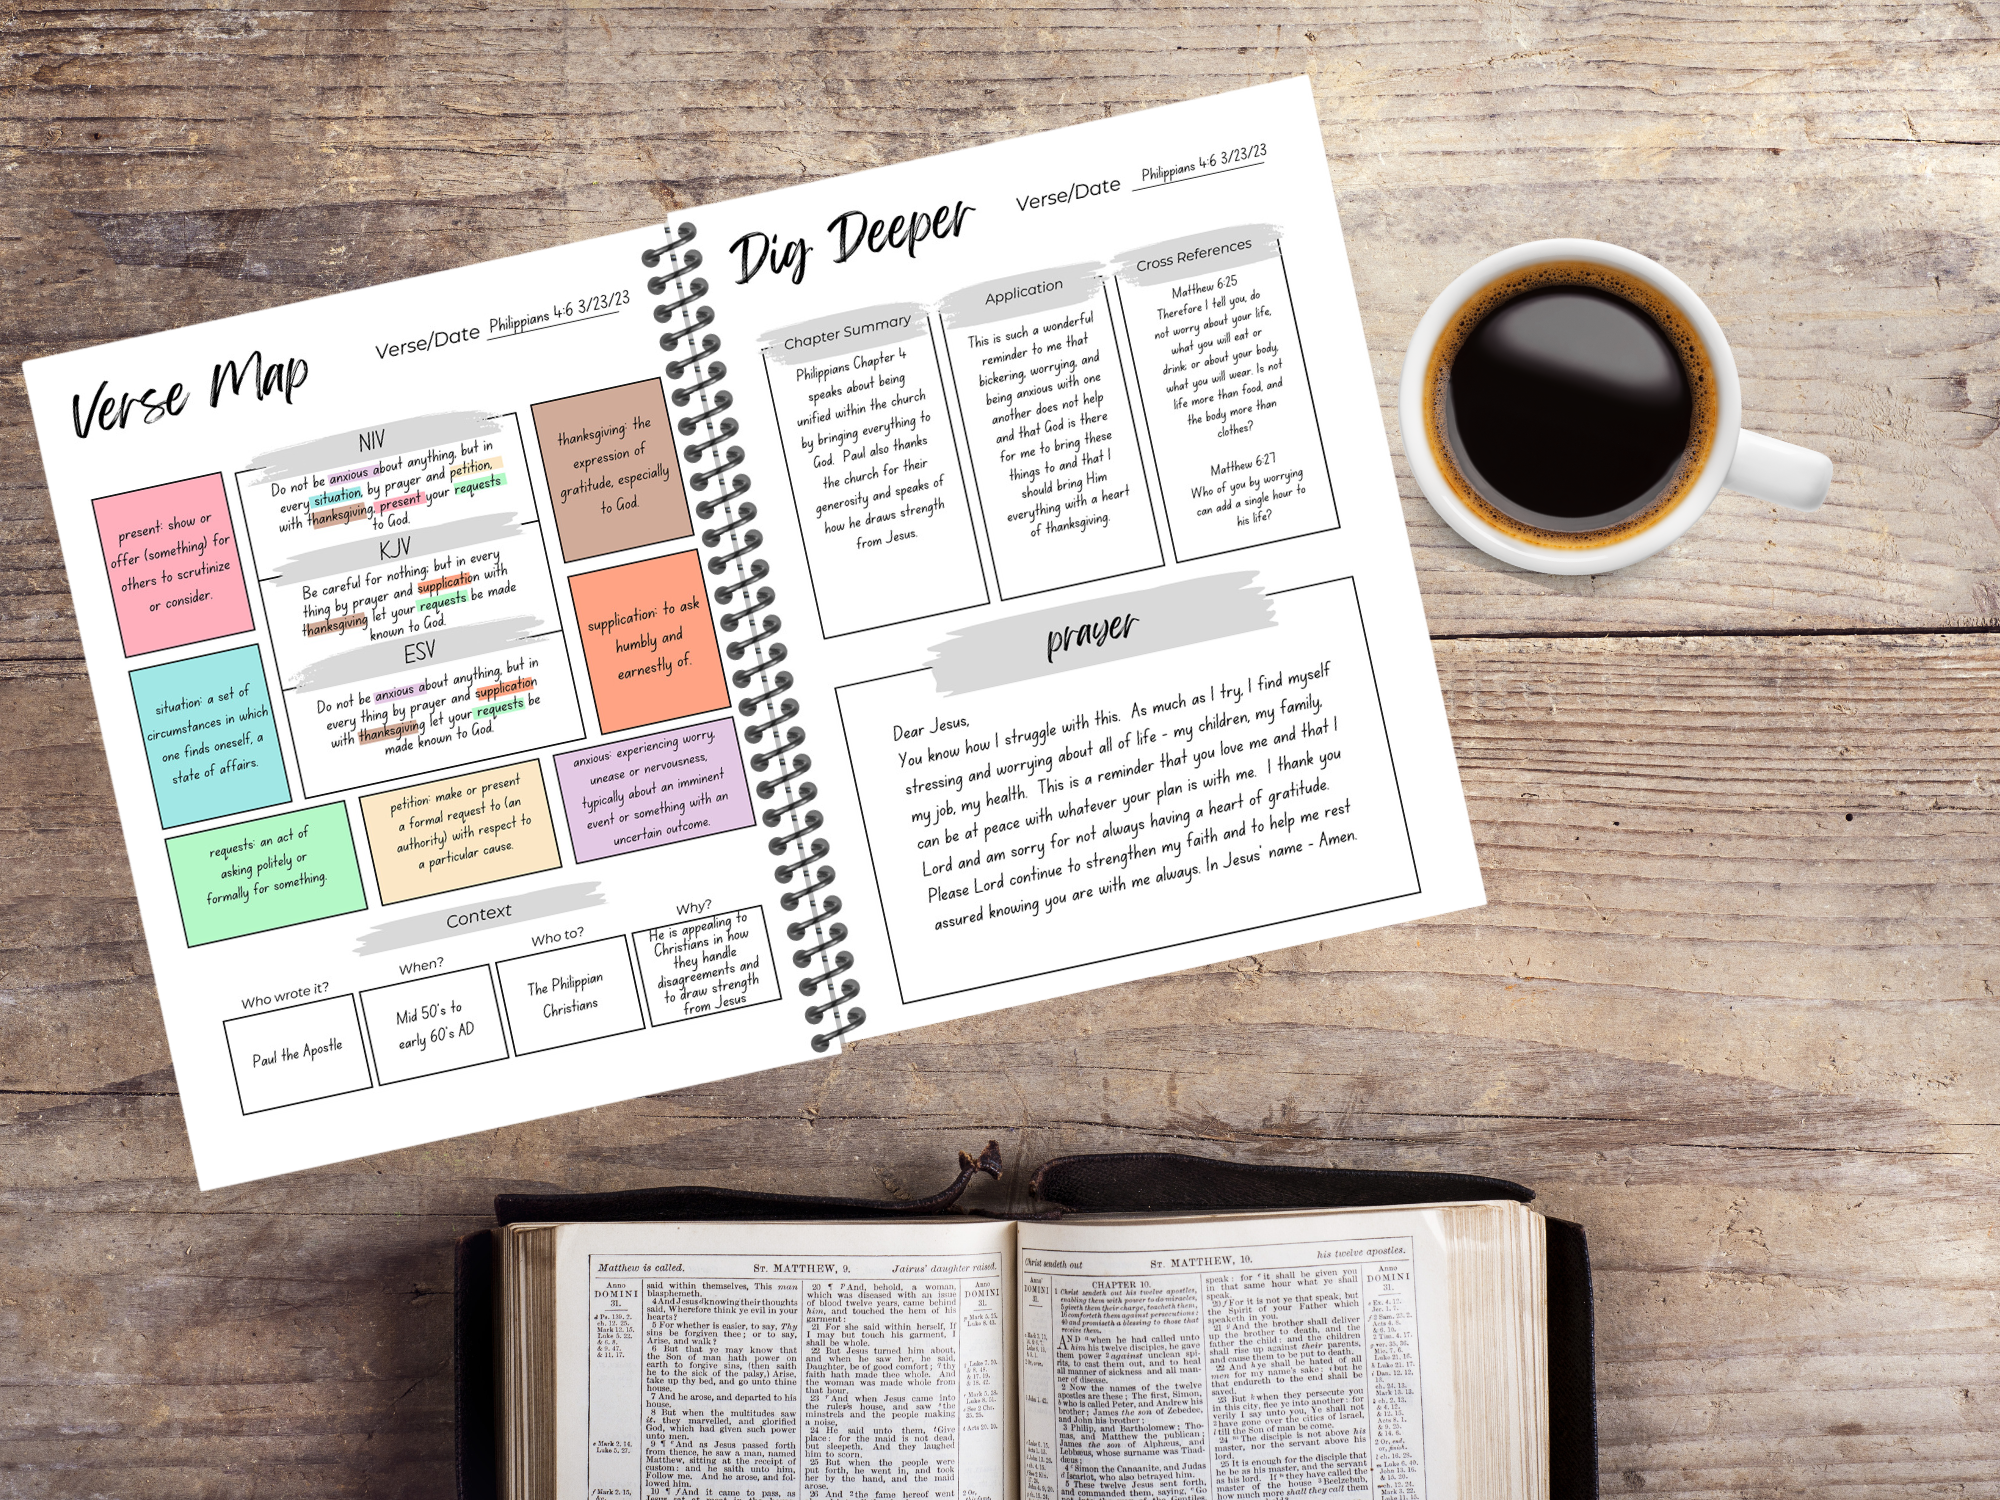 Map/ Location Scripture Journal Kit – Worthy Written Words